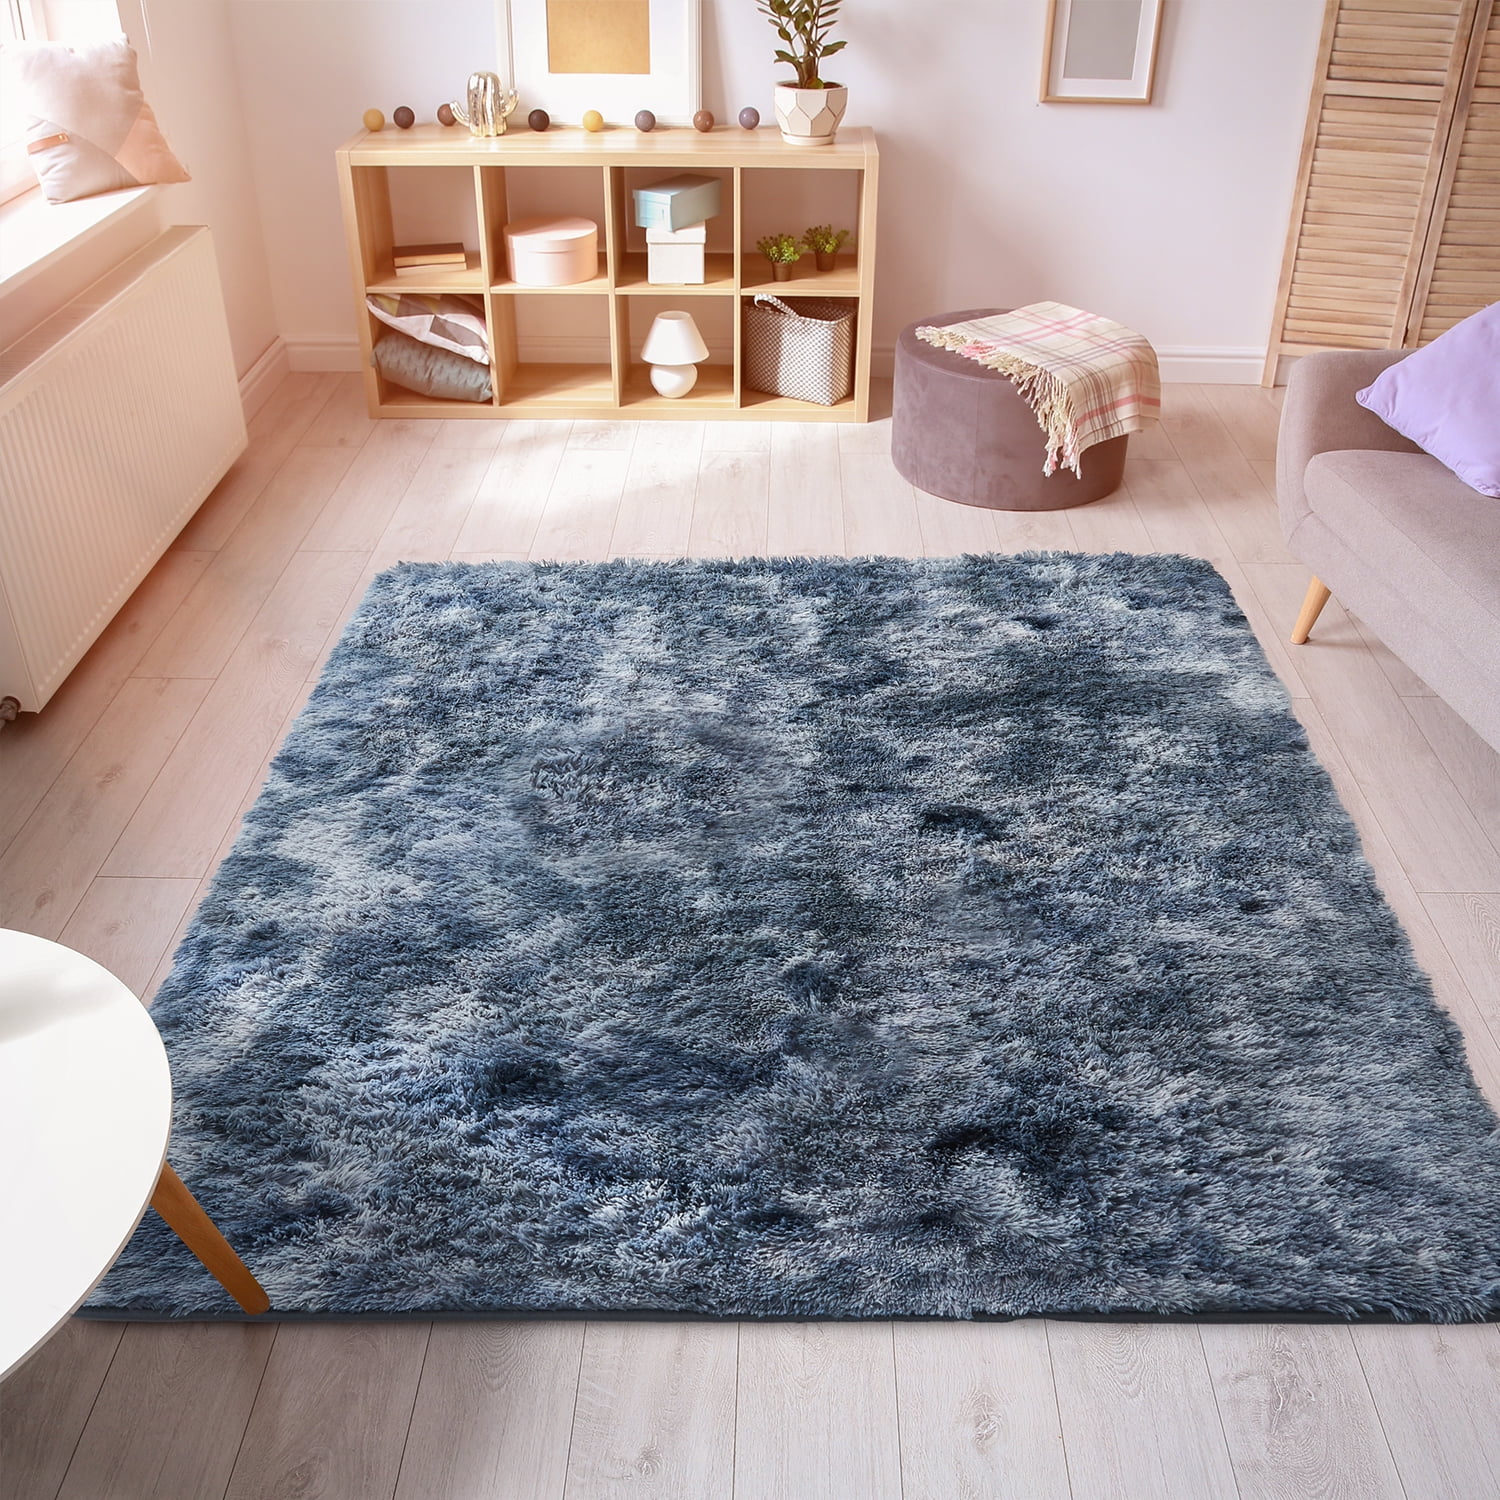 Pink Cat Animal Print Large Rectangle Rug Carpet Mat Living Room Bedroom 